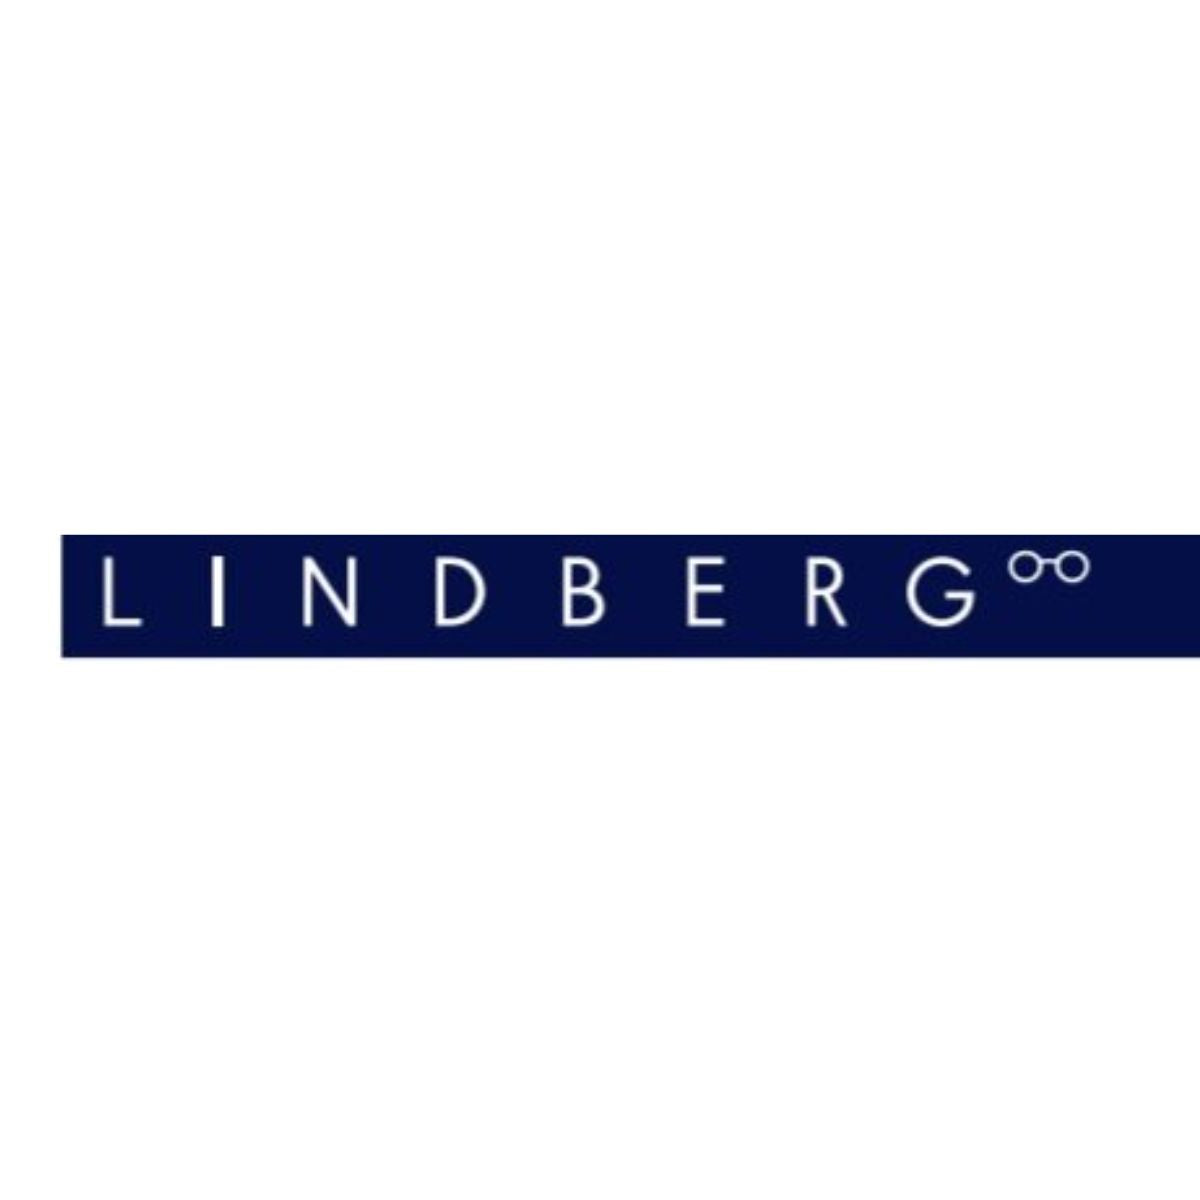 "Lindberg Luxury eyewear brands sunglasses & optical frames and lenses at optorium"